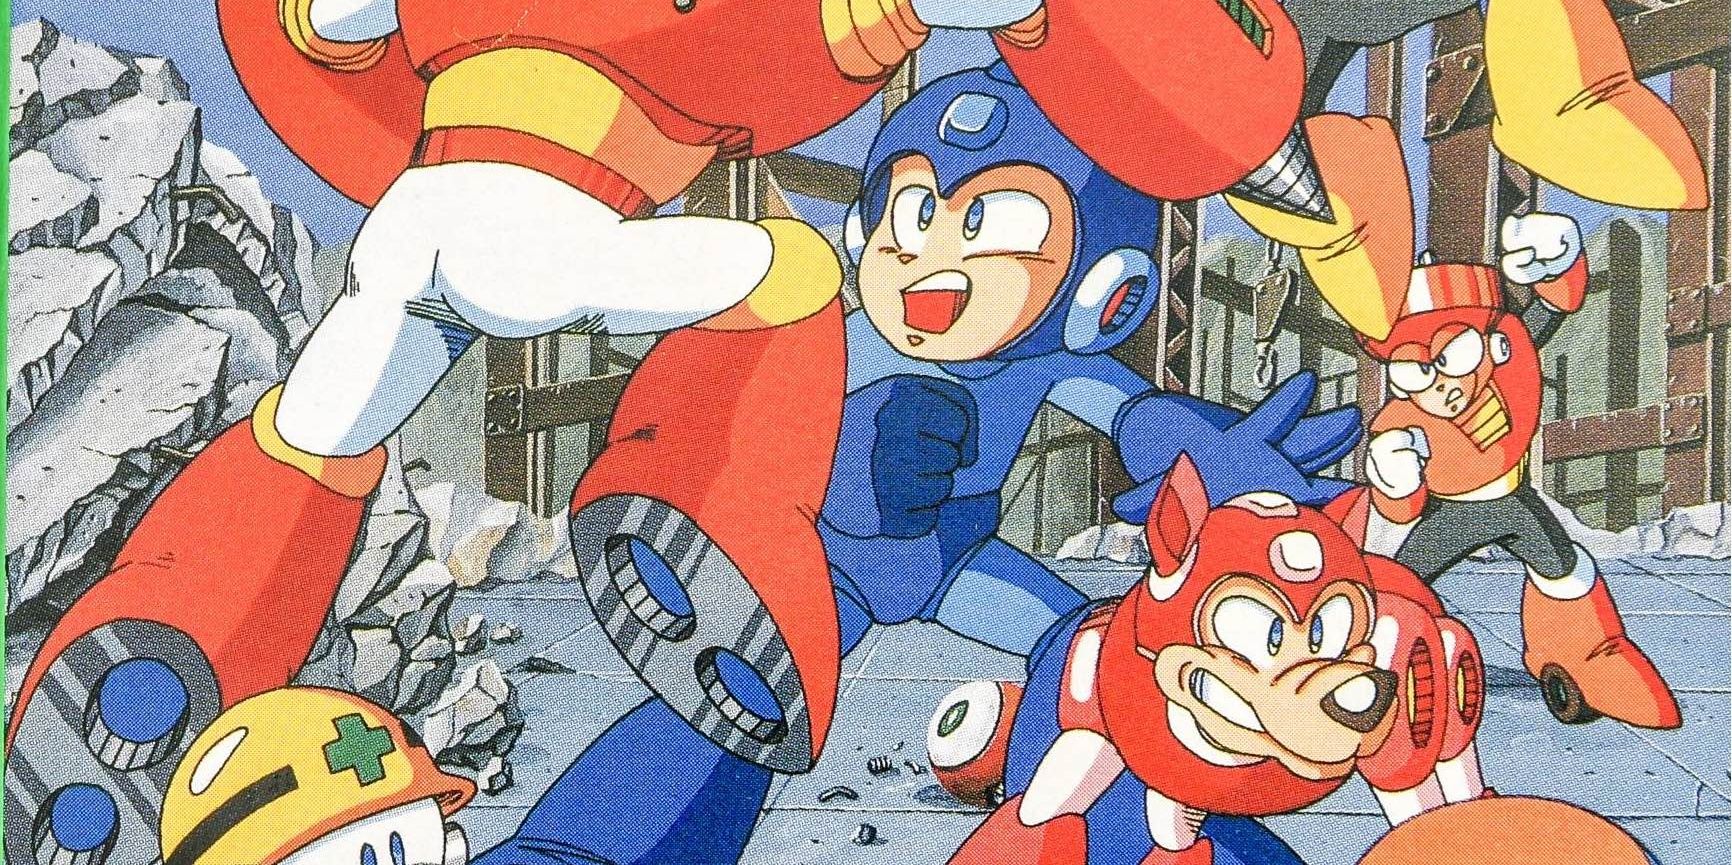 Cover art on the Japanese version of Mega Man II